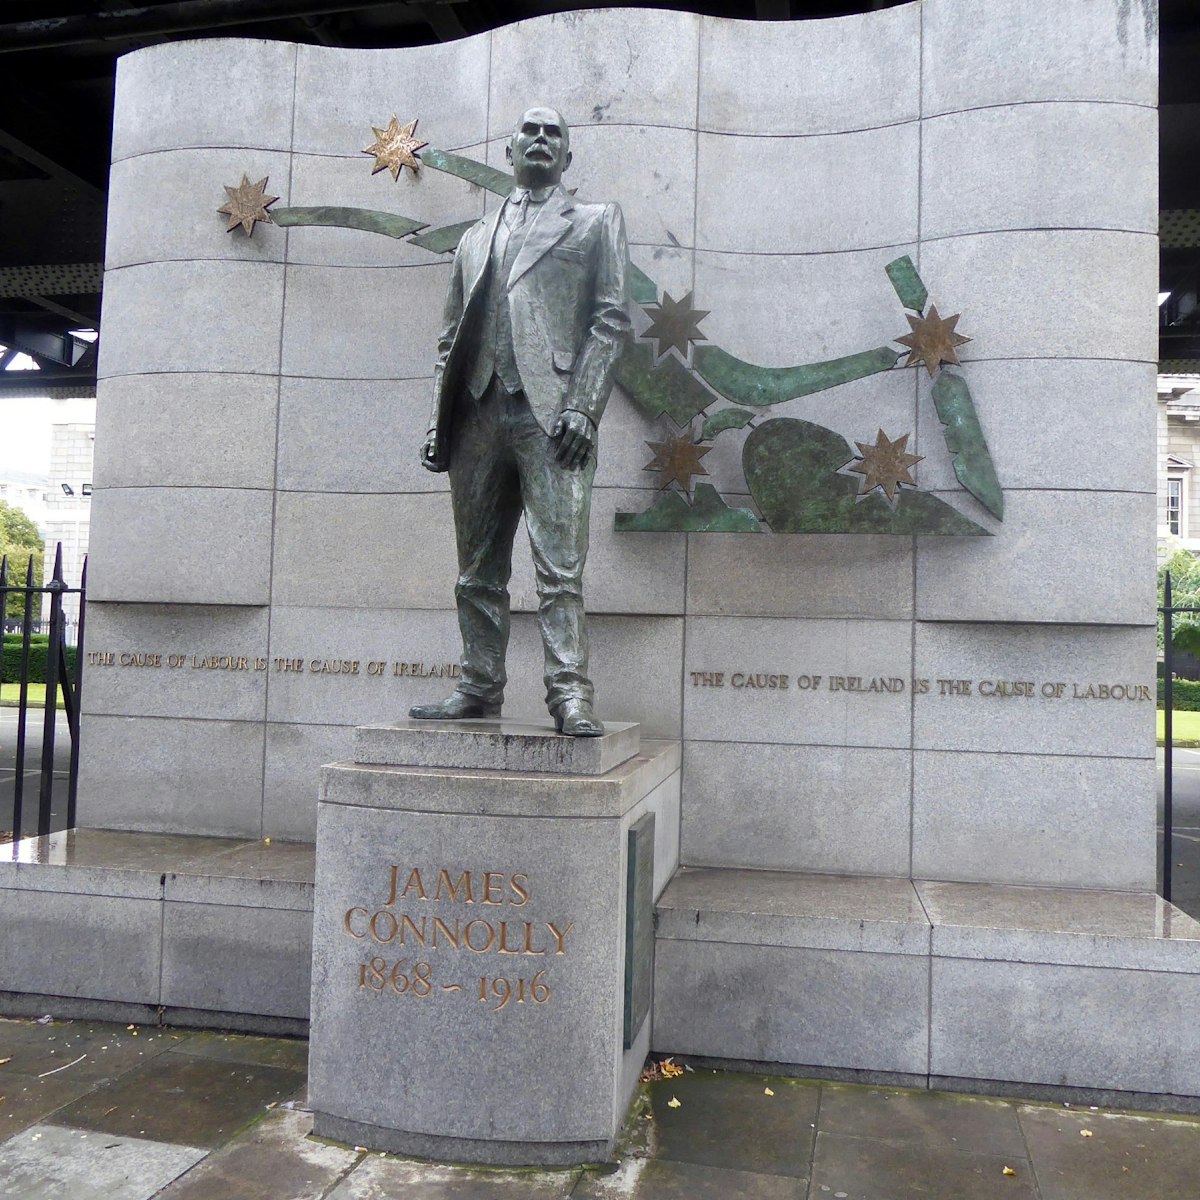 A statue of socialist revolutionary James Connolly in Dublin